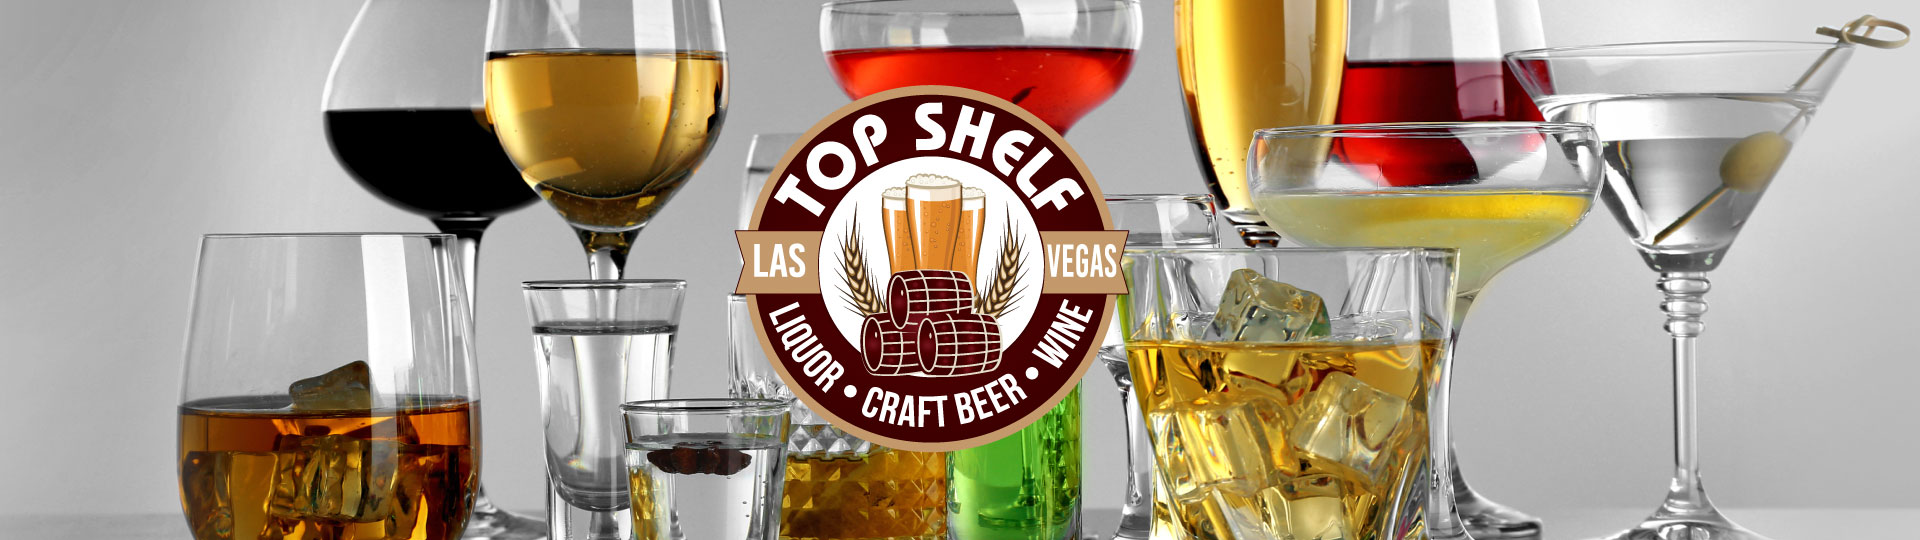 Top Shelf Wine & Spirits - Las Vegas